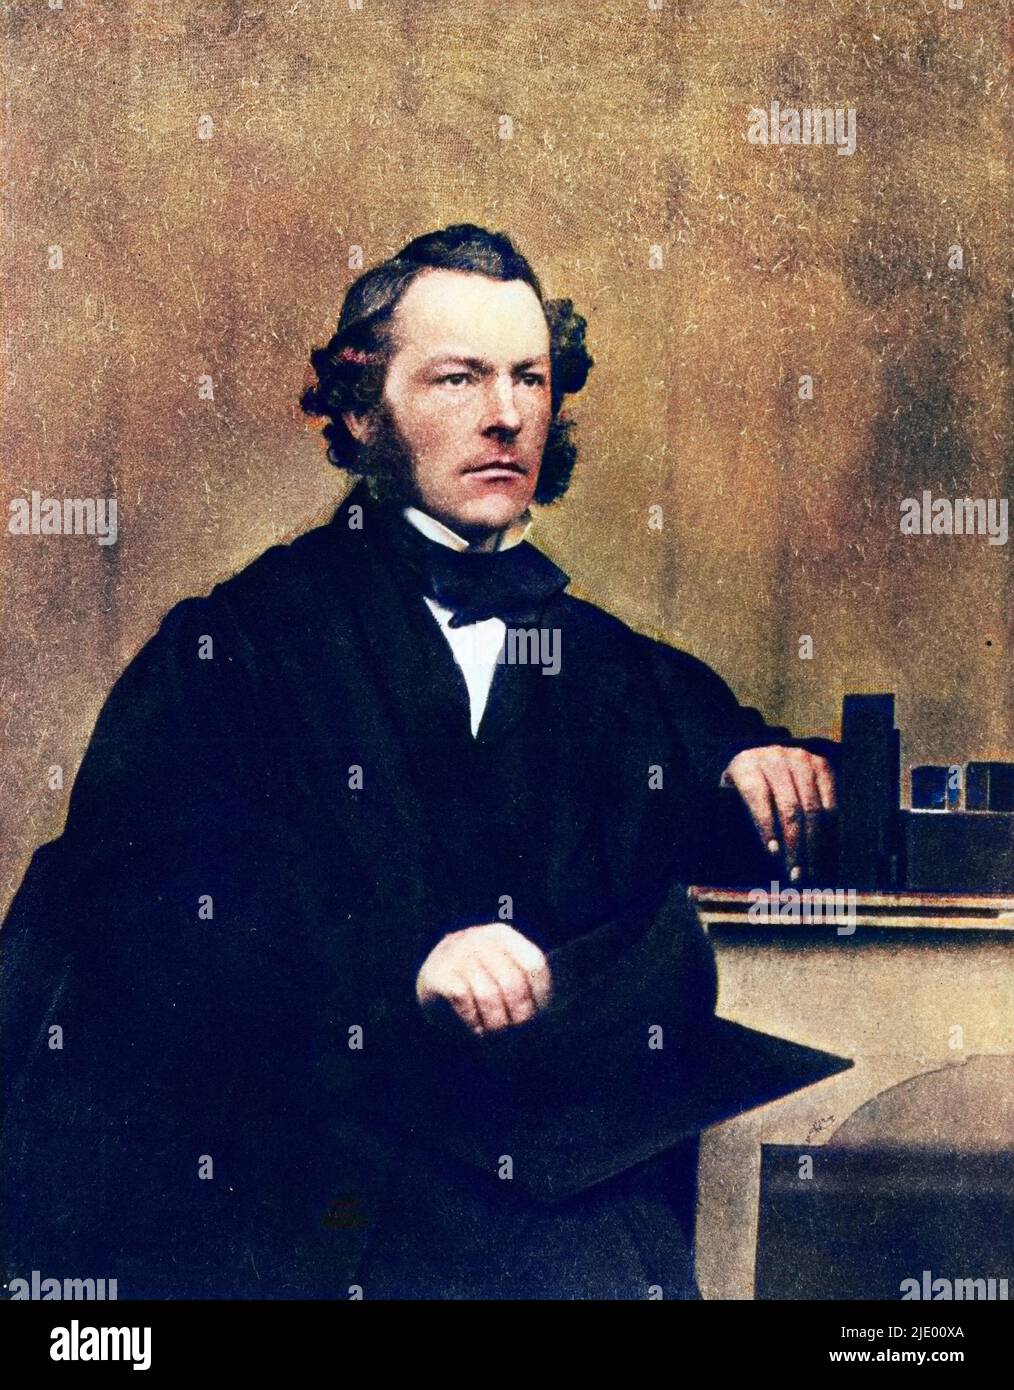 Sir George Gabriel Stokes  Irish English physicist and mathematician - portrait de sir George Gabriel Stokes (1819-1903), mathematicien et physicien britannique. Stock Photo